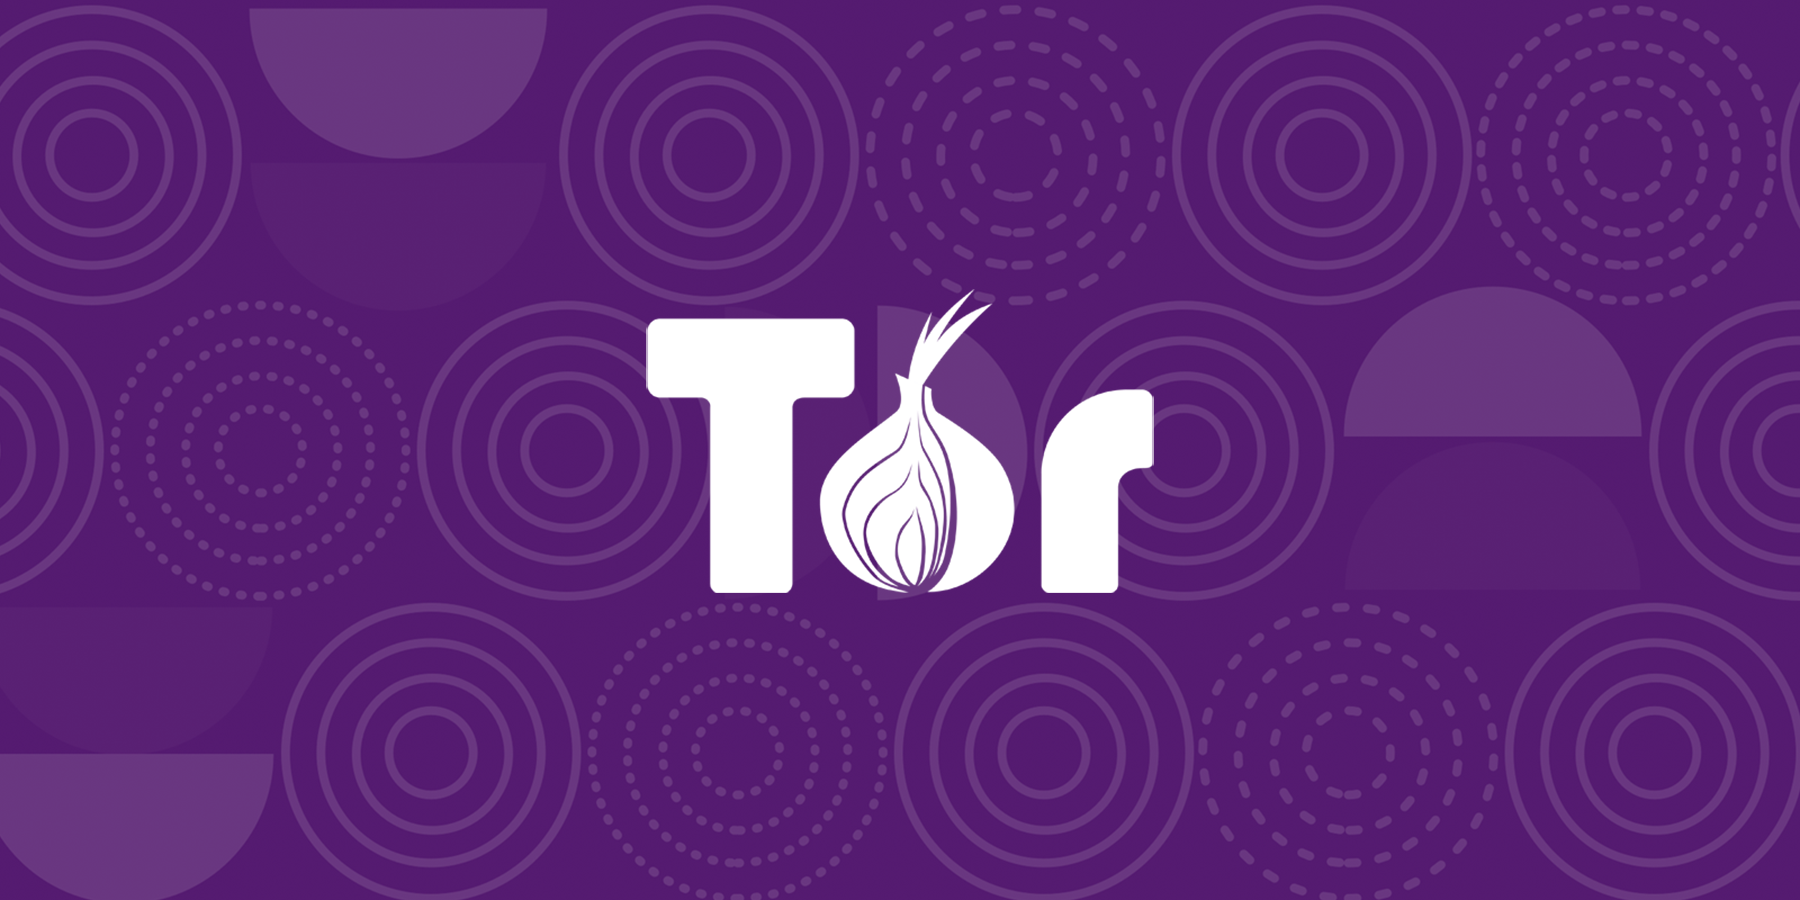 tor Project logo